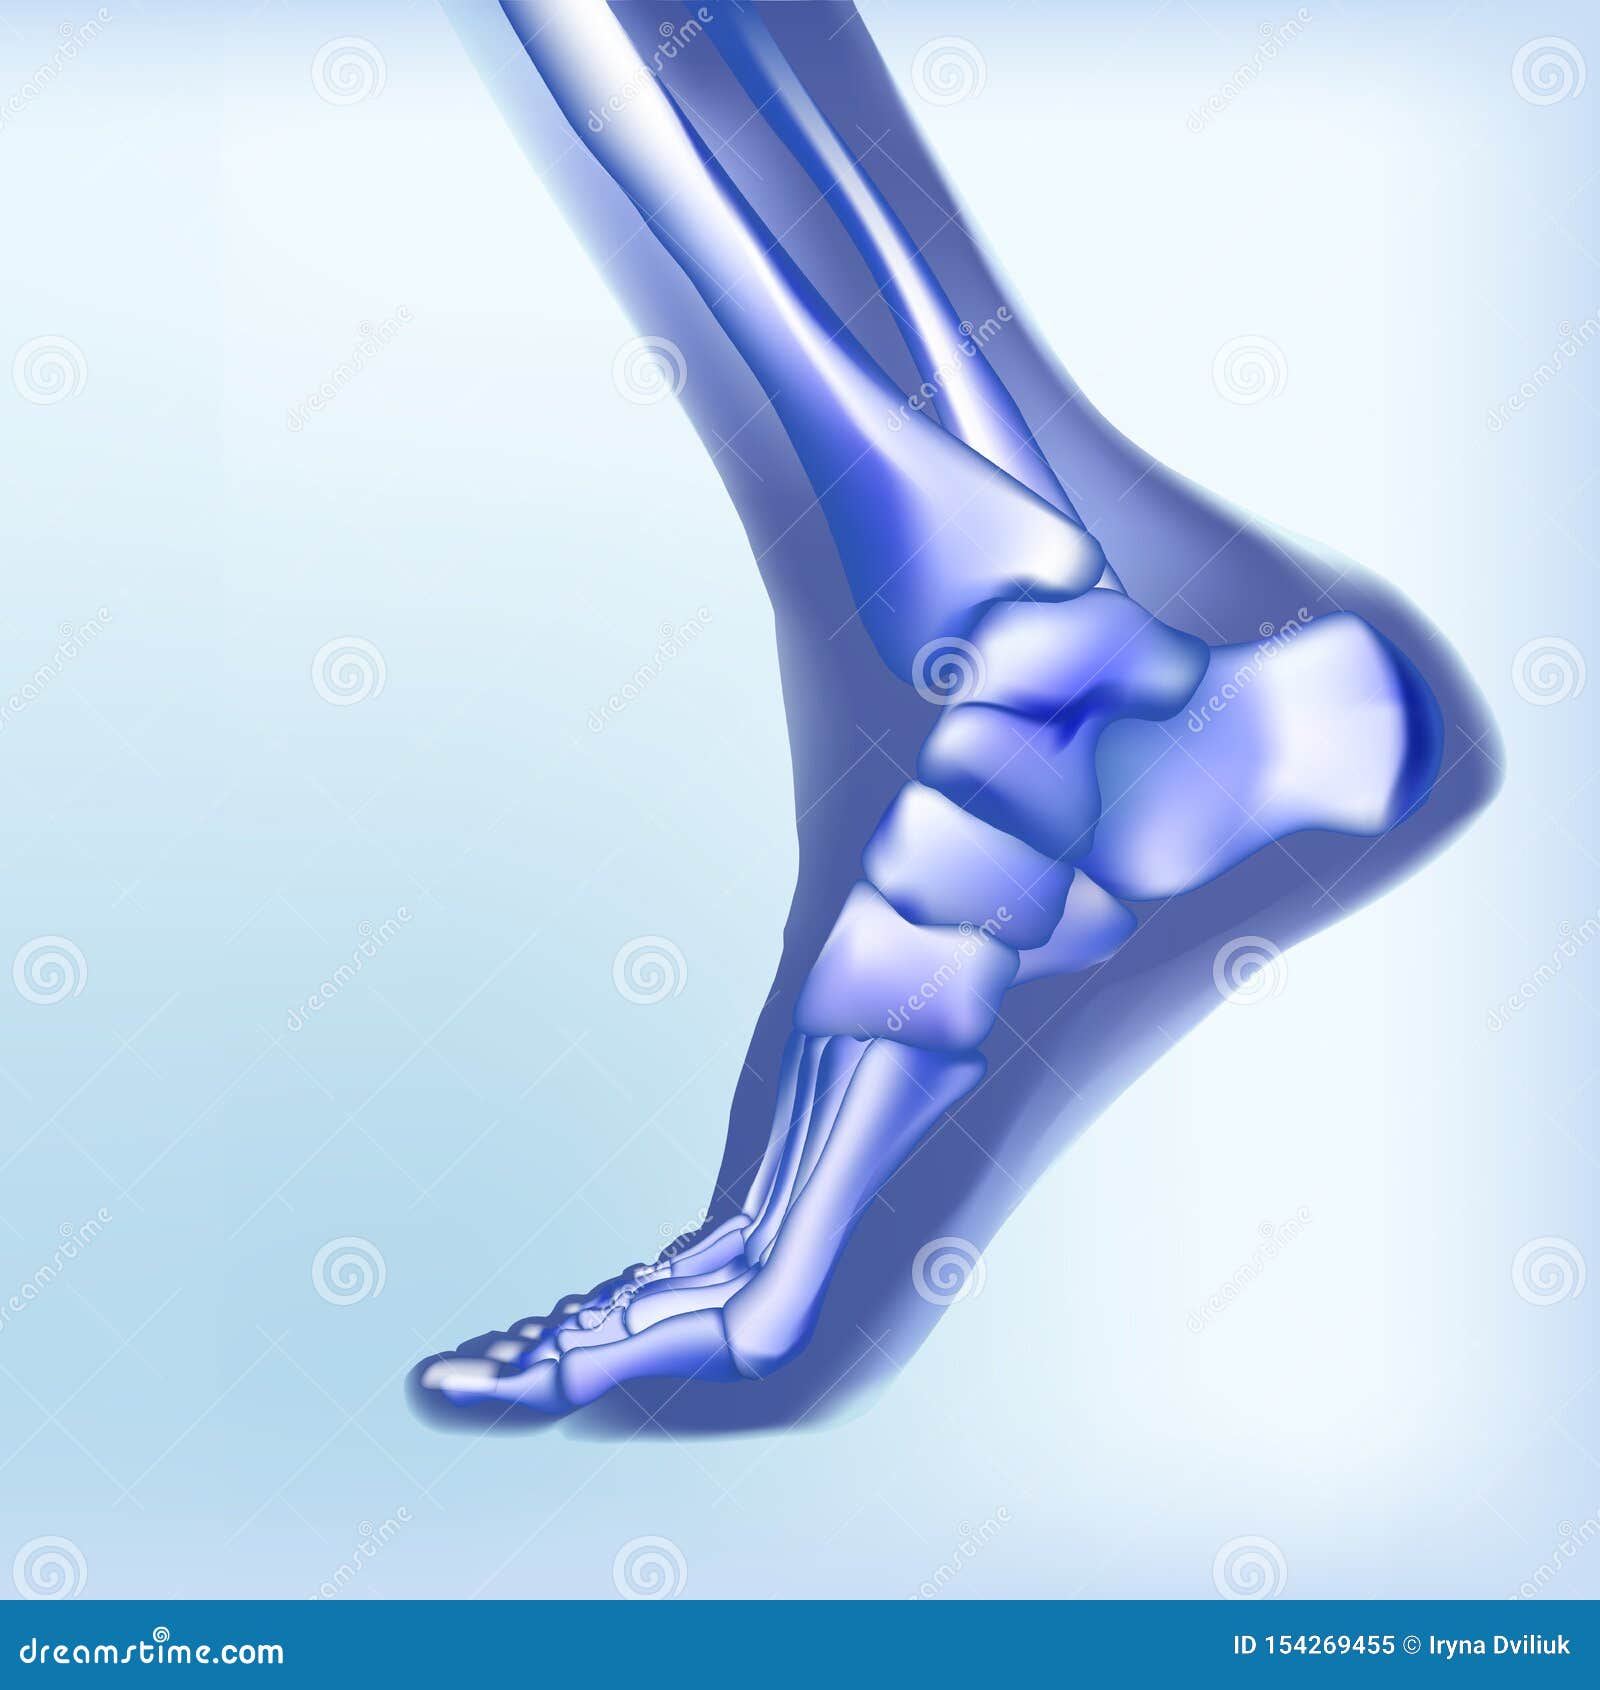 light blue visualization of bones of foot.